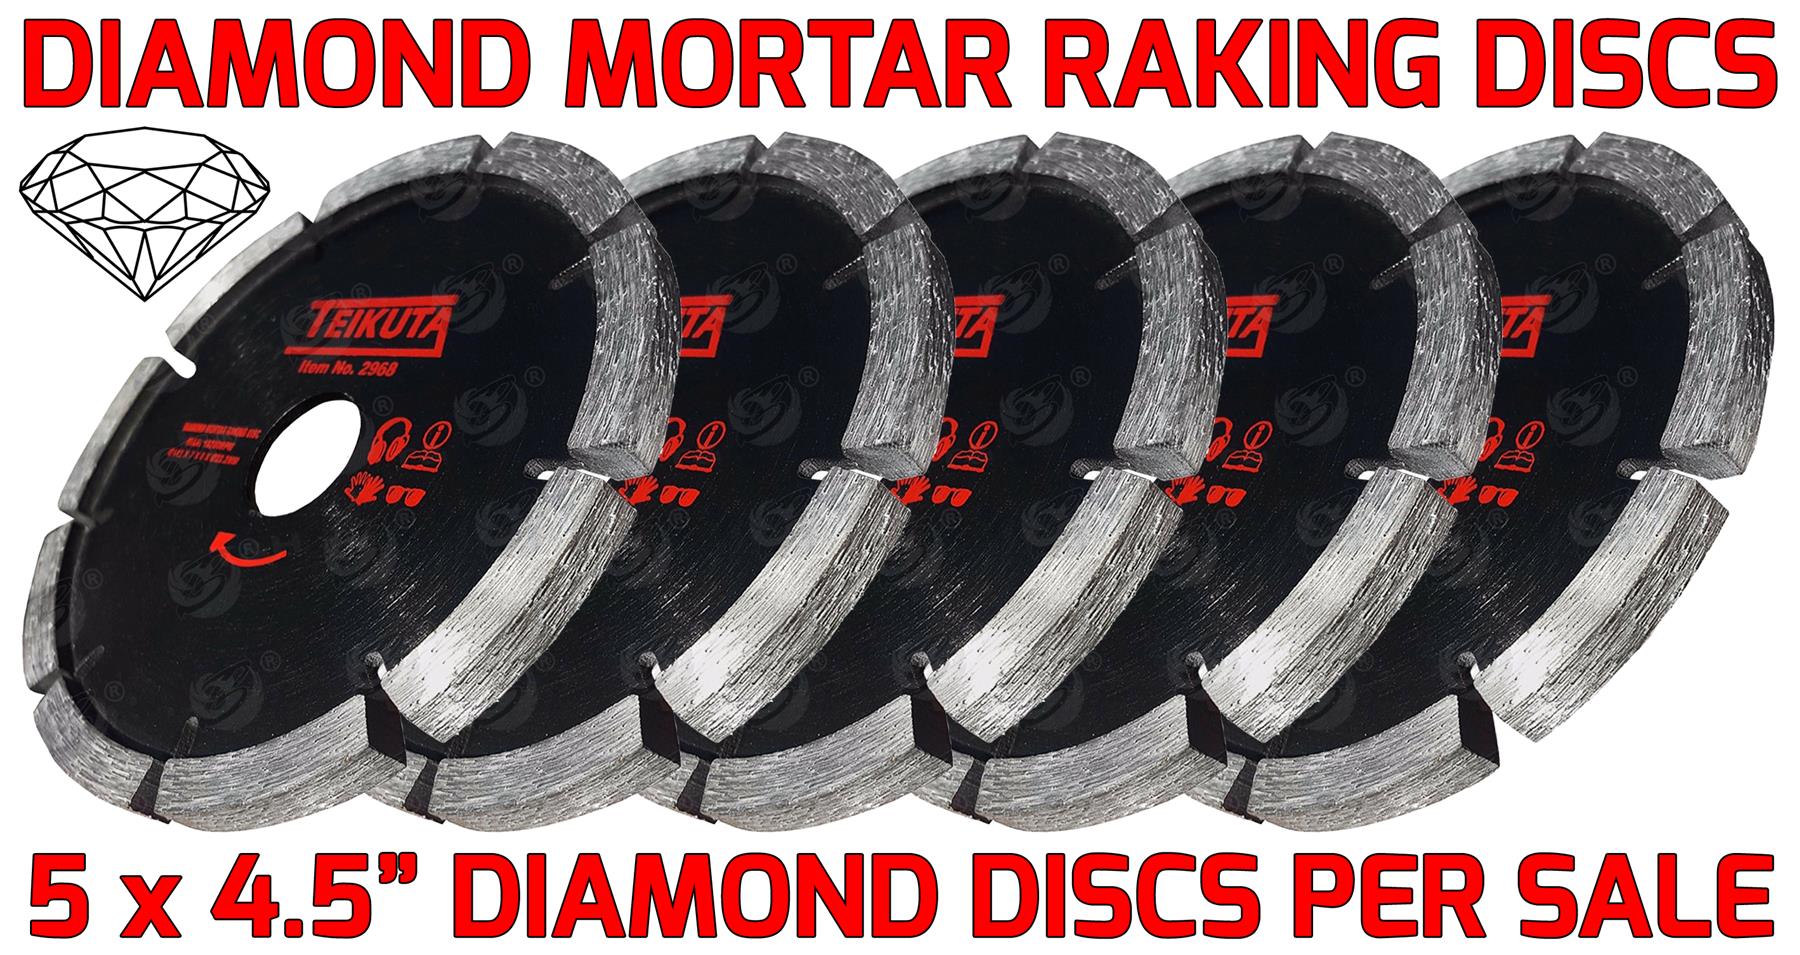 TEIKUTA 4.5" ( 115MM ) DIAMOND MORTAR RAKING DISC ( X 5 )